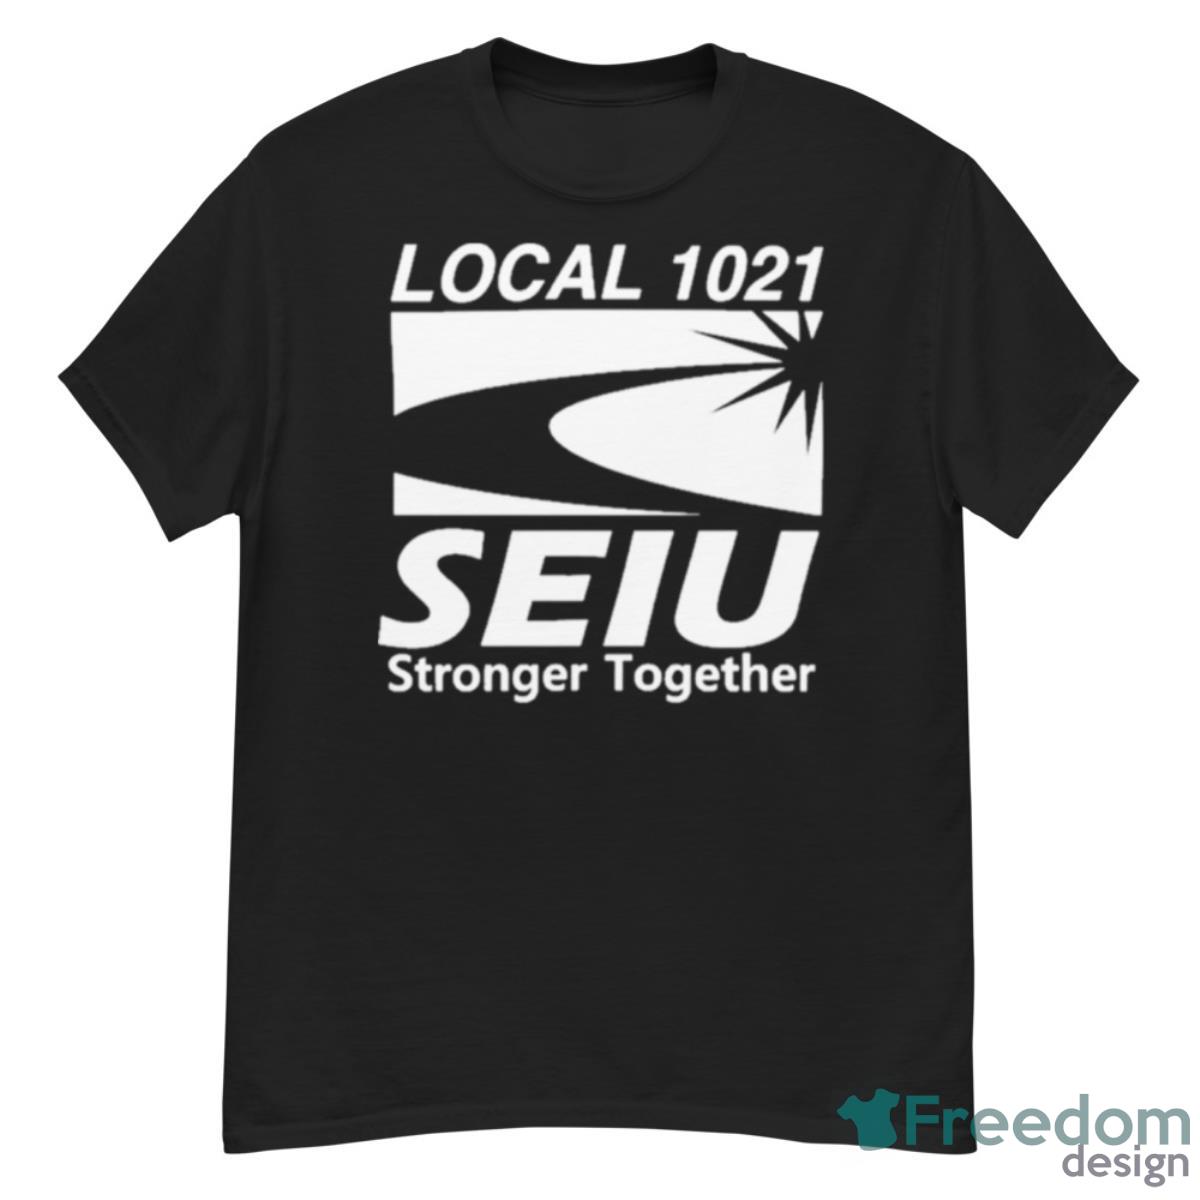 Local 1021 Seiu Stronger Together Shirt - G500 Men’s Classic T-Shirt